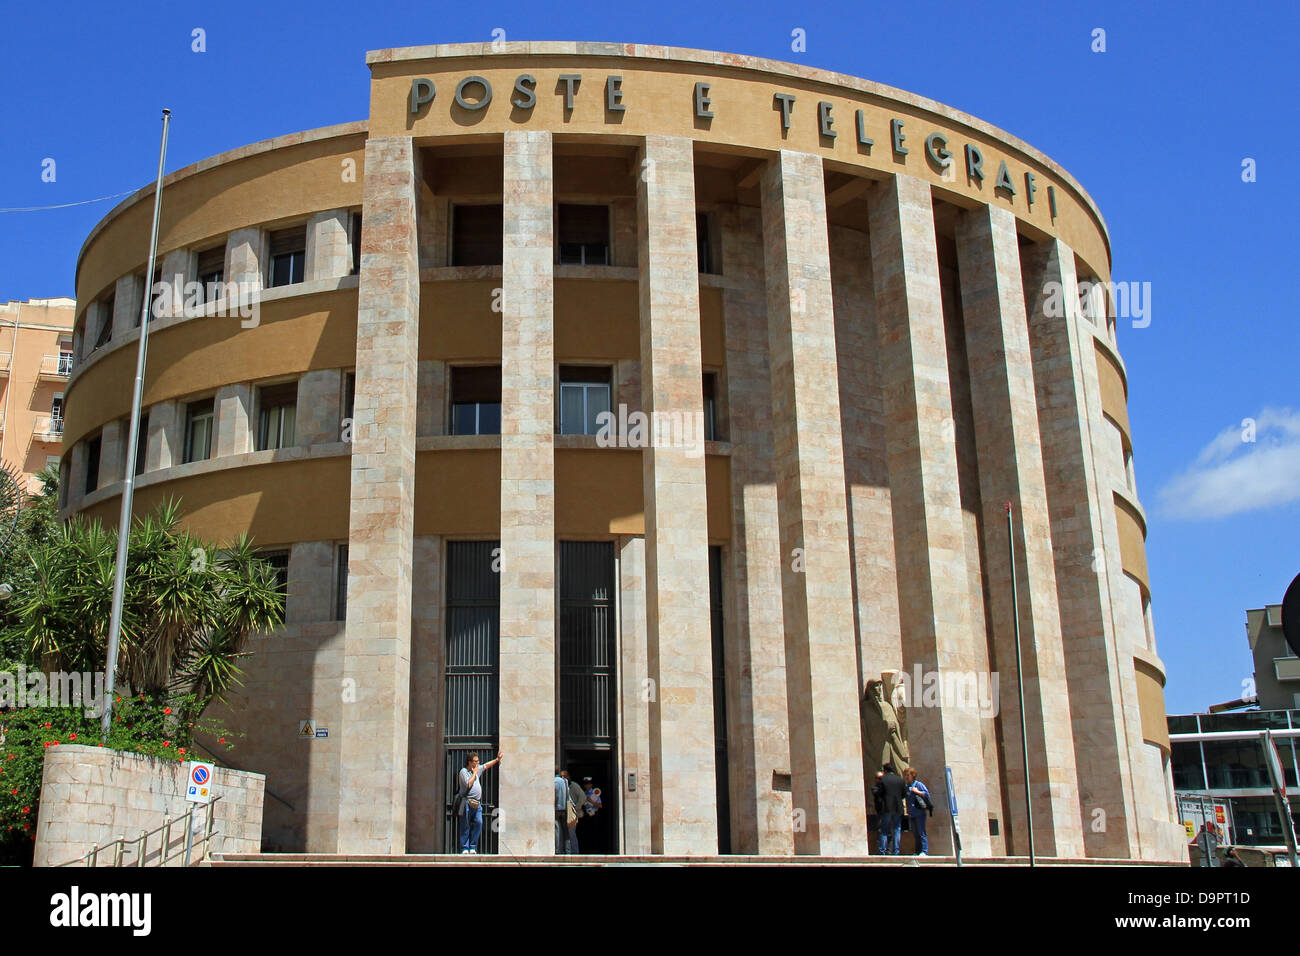 Poste e Telegrafi" Postal and telegraph office in Agrigento, Sicily Stock  Photo - Alamy